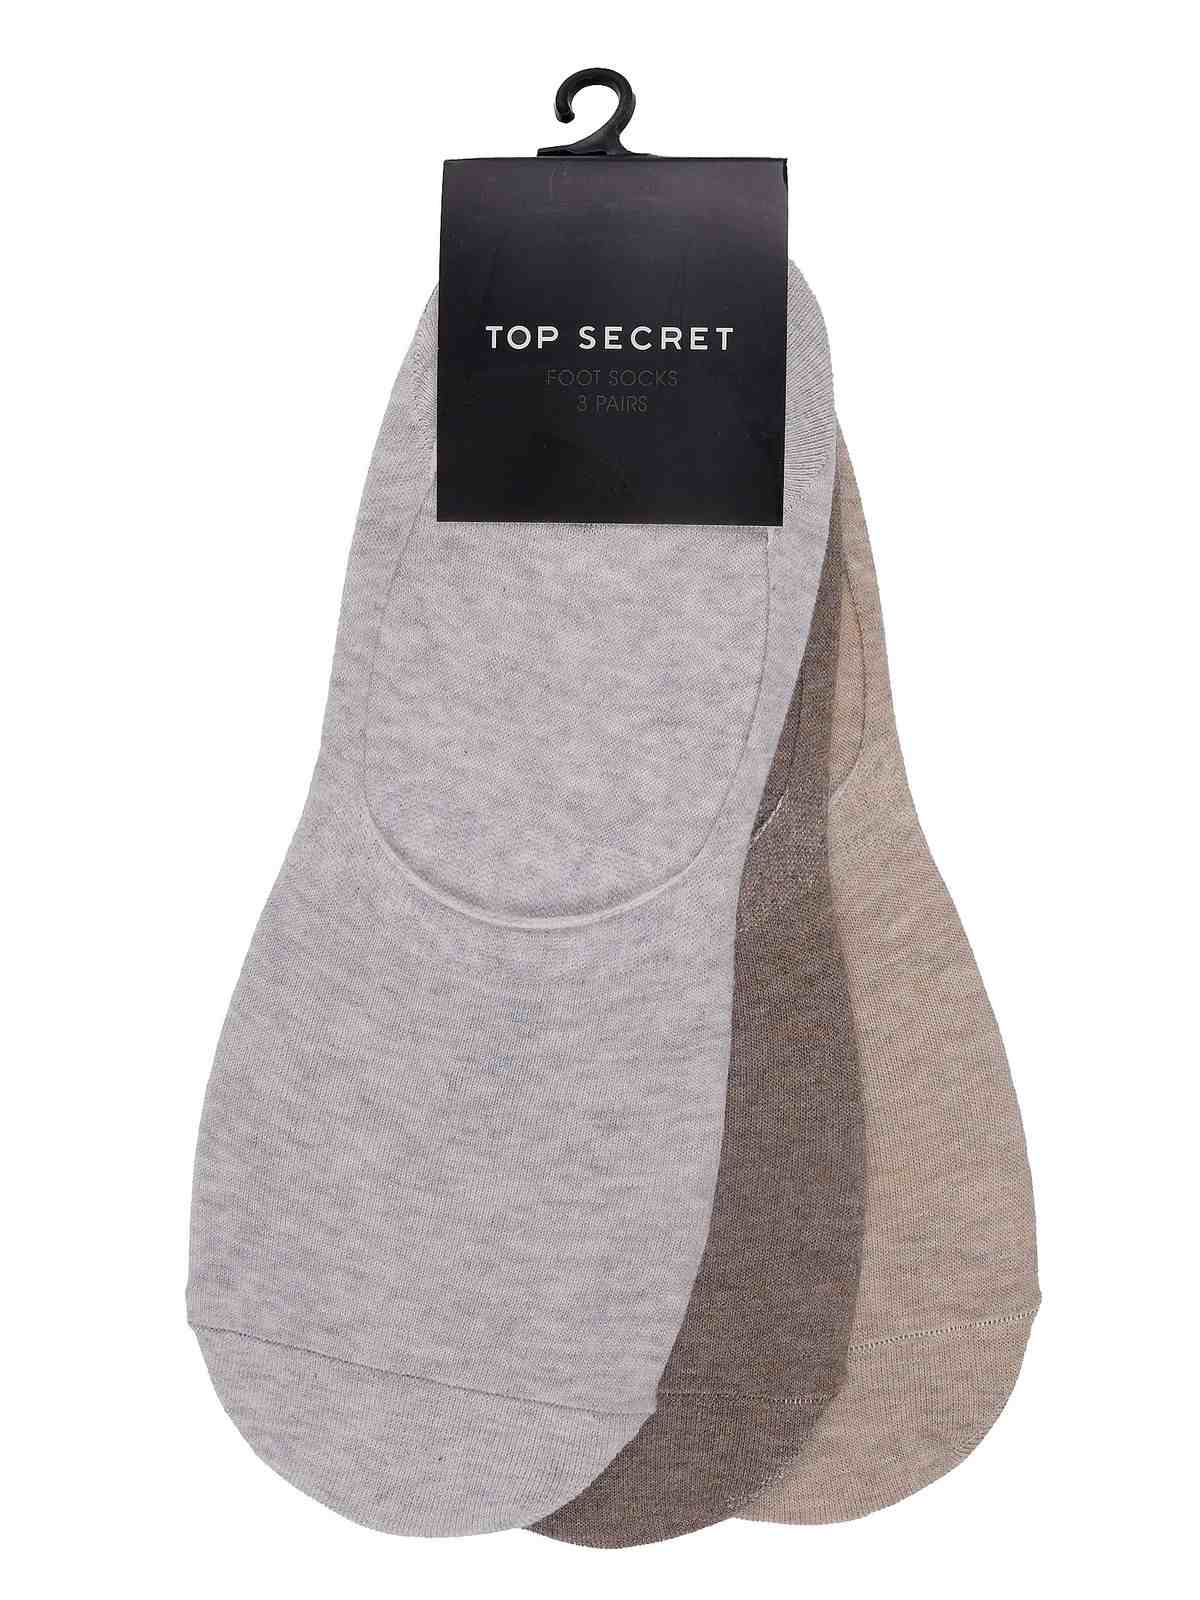 Top Secret MEN'S